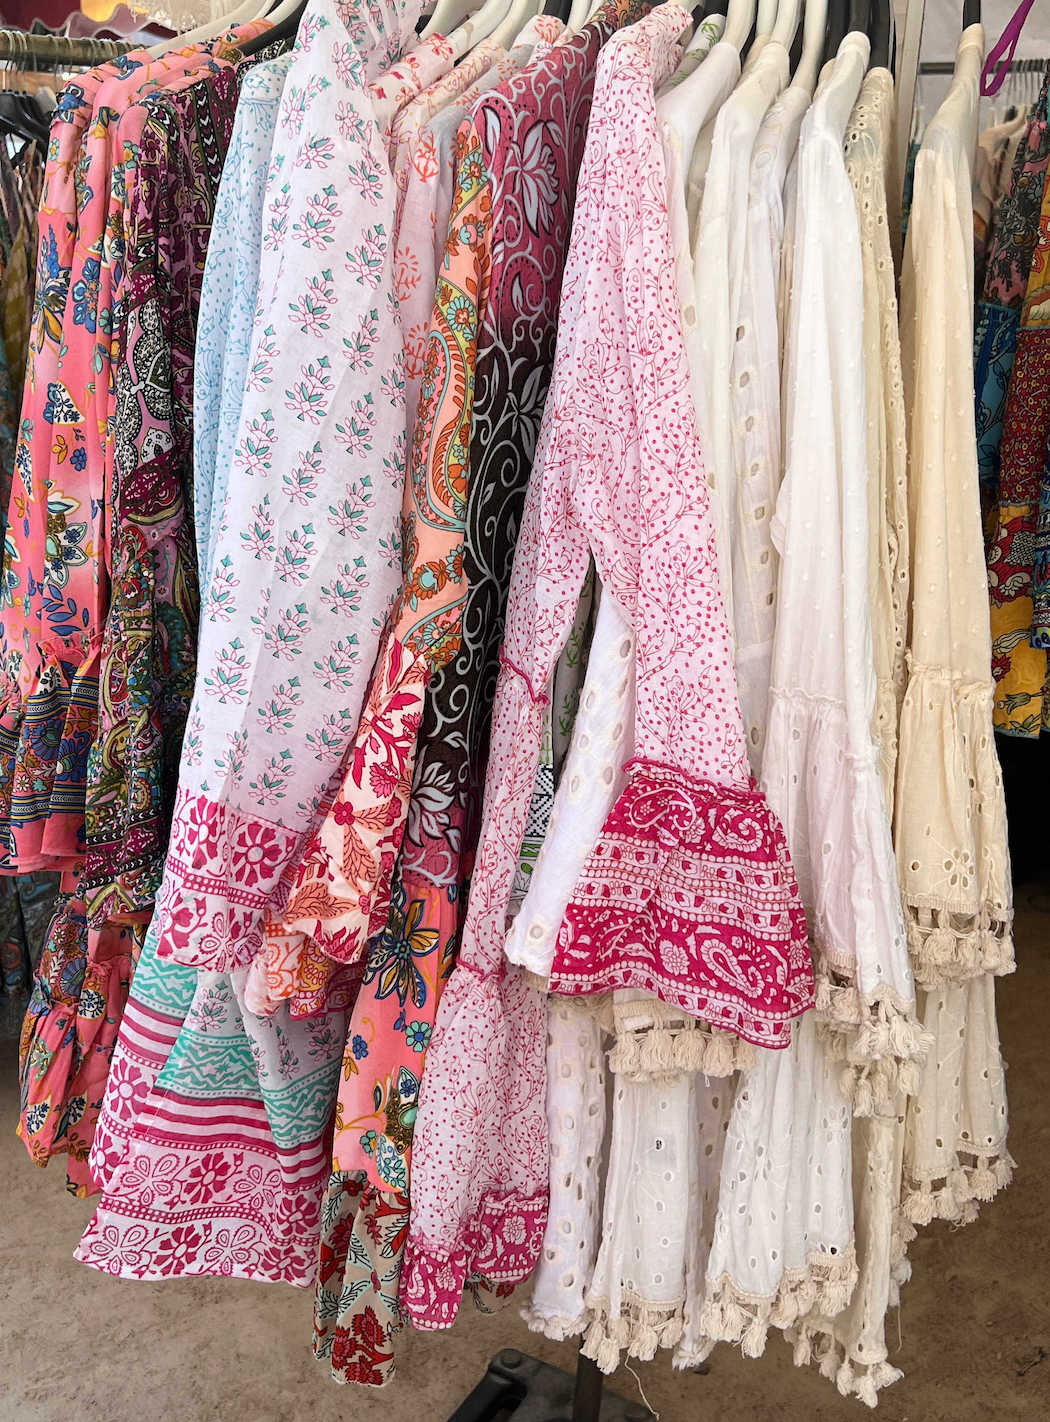 Short print dresses in St.Tropez market June 23